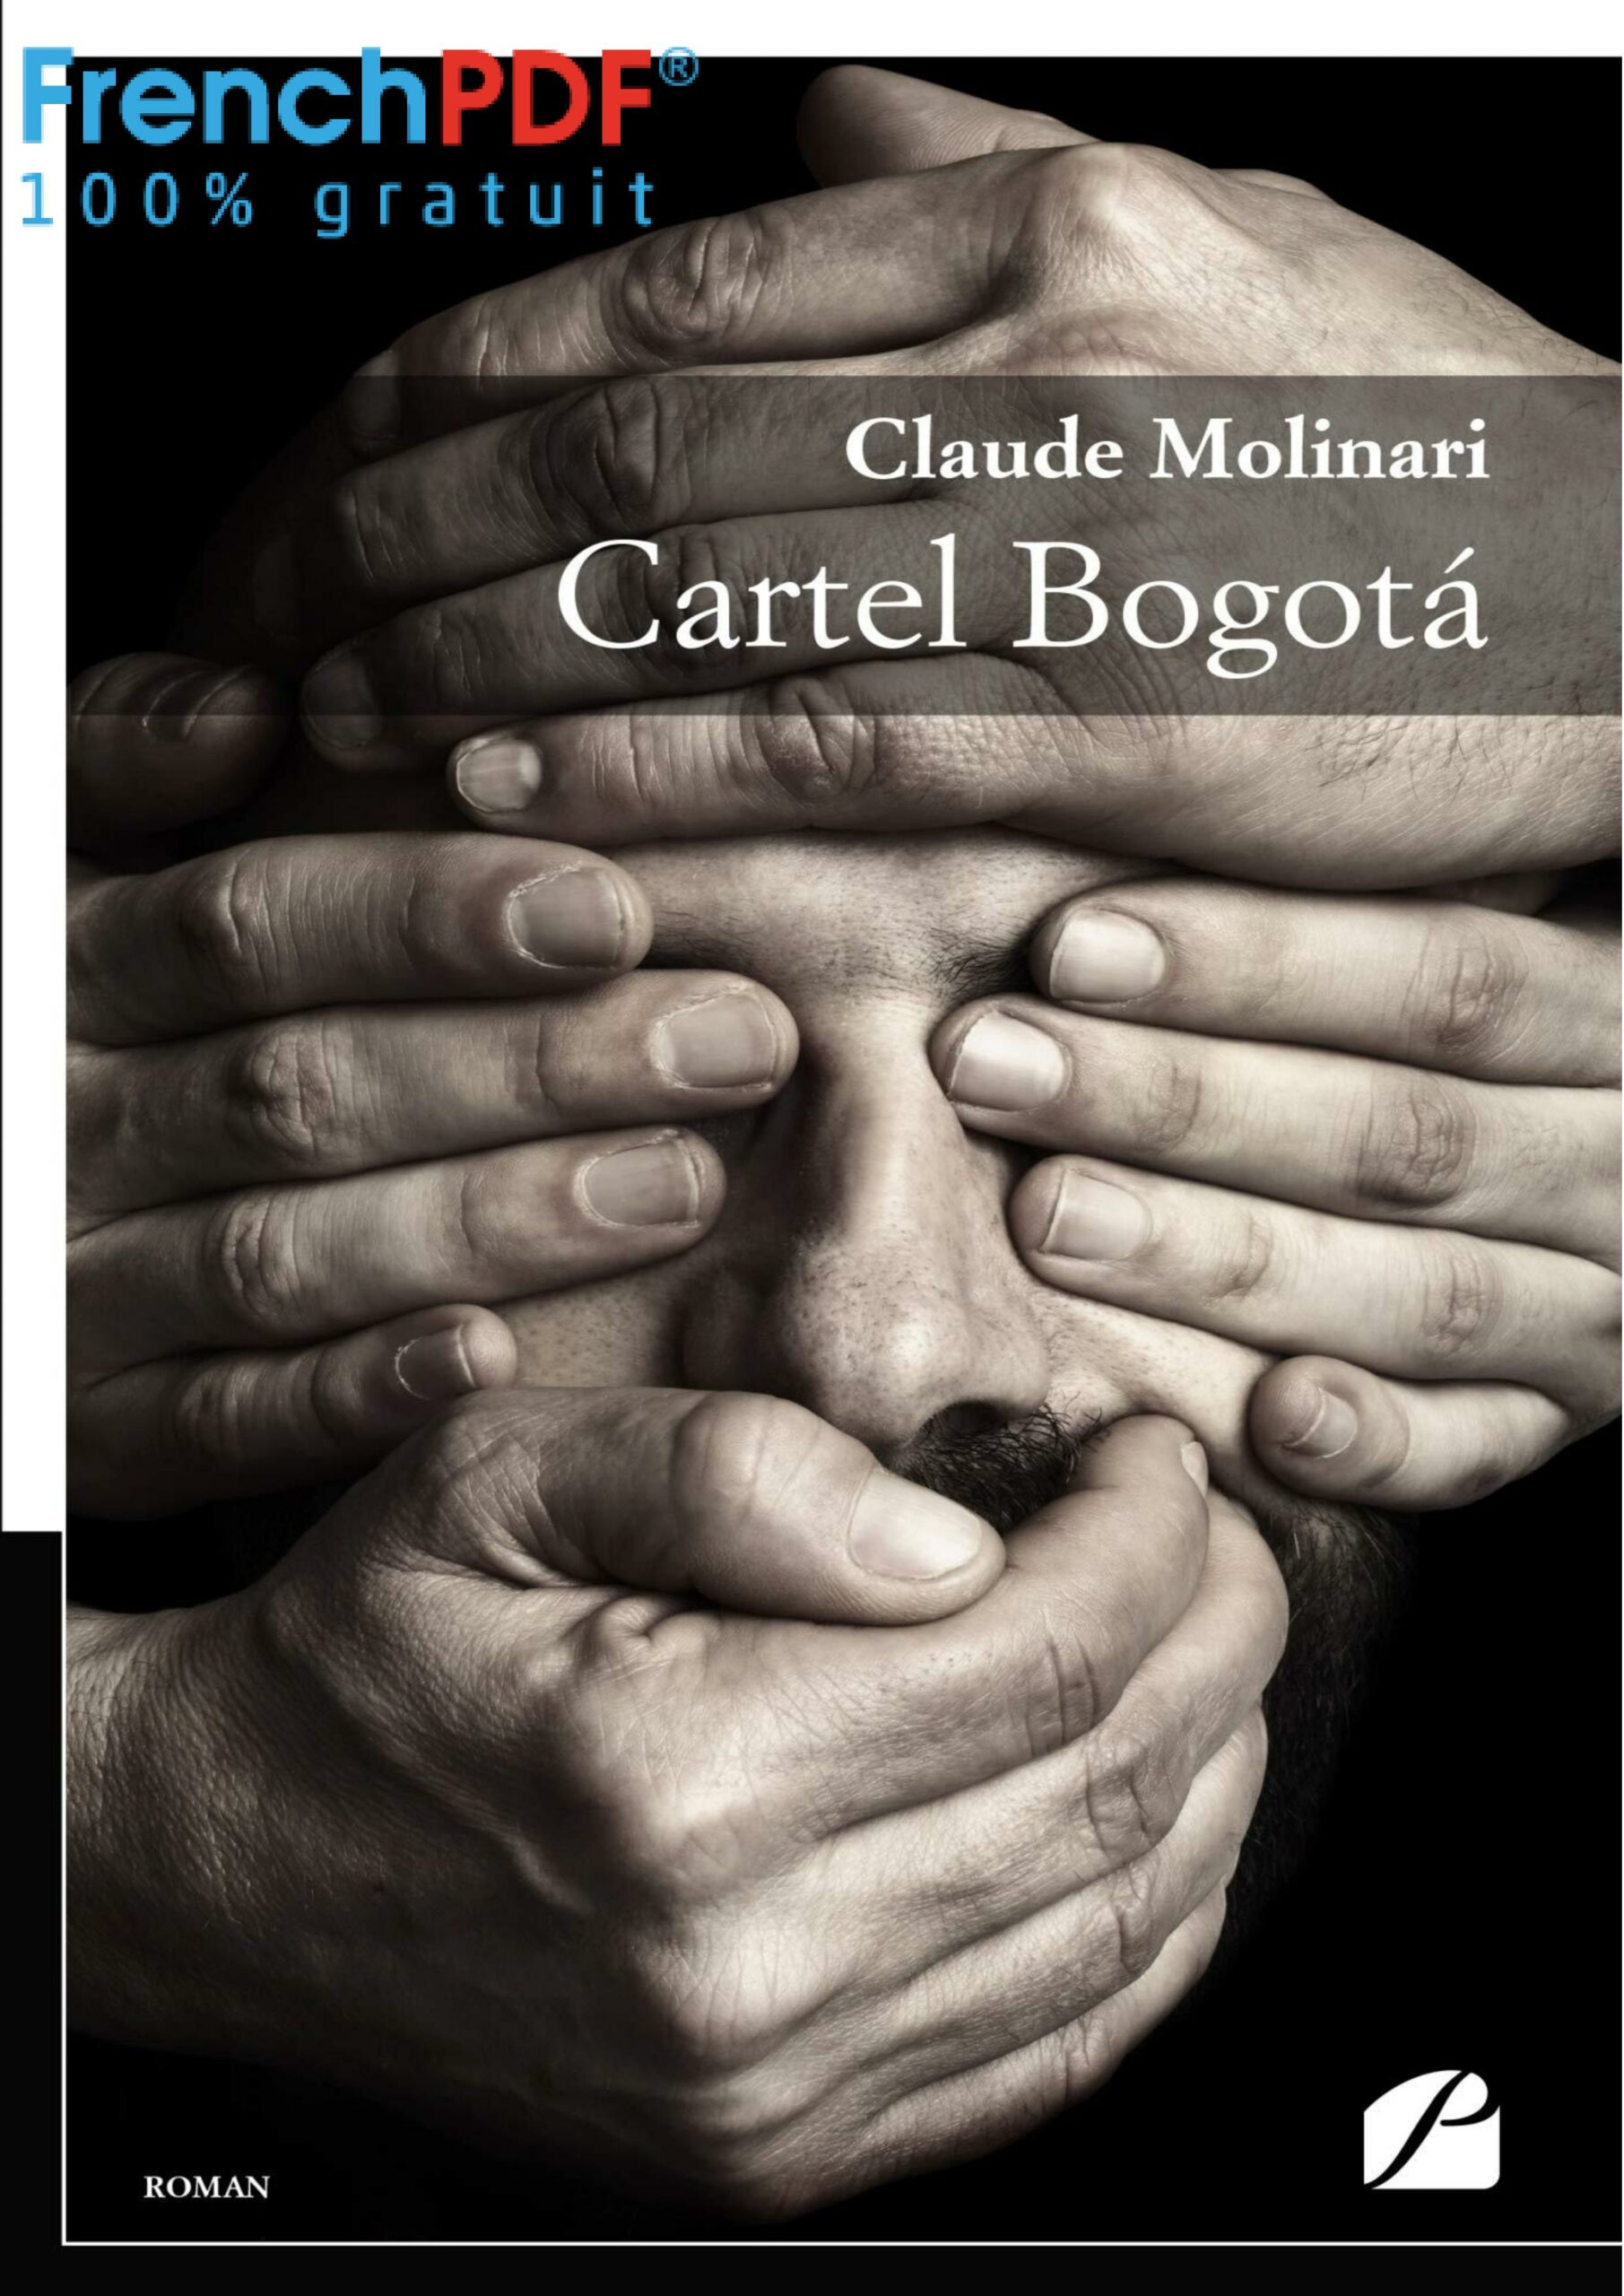 Cartel Bogota - Molinari, Claude - FrenchPDF.com